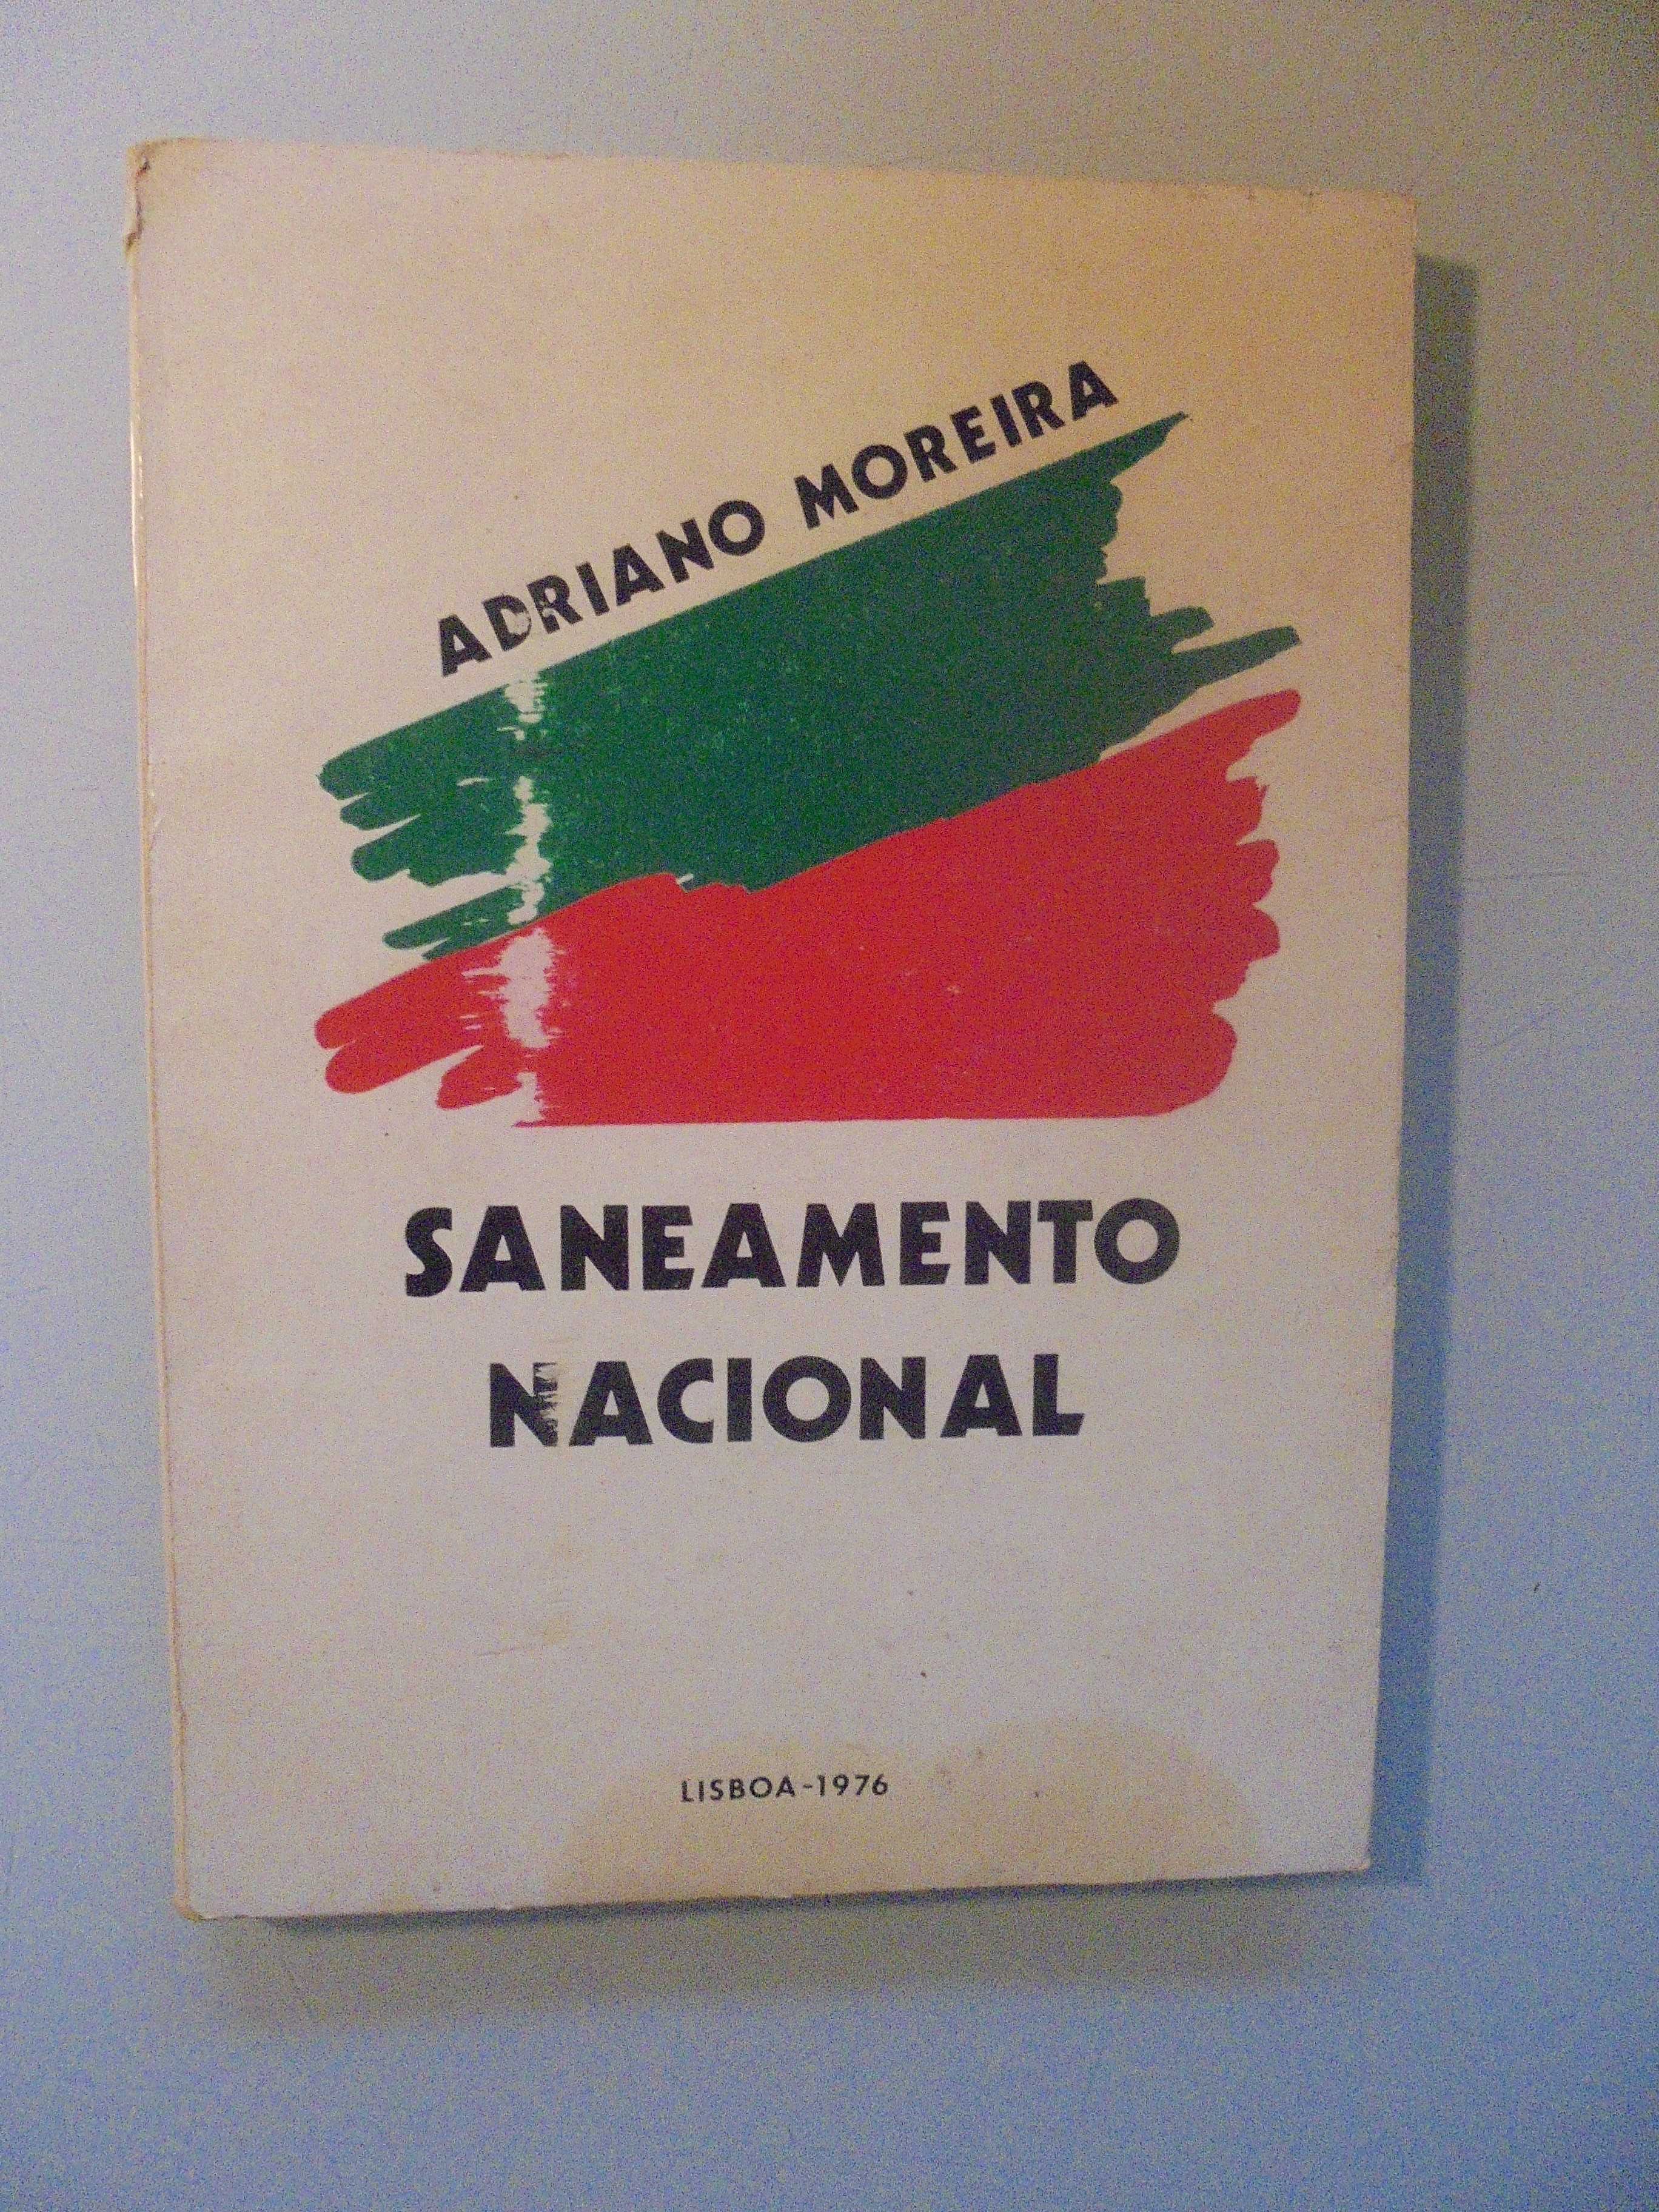 Moreira (Adriano);Saneamento nacional